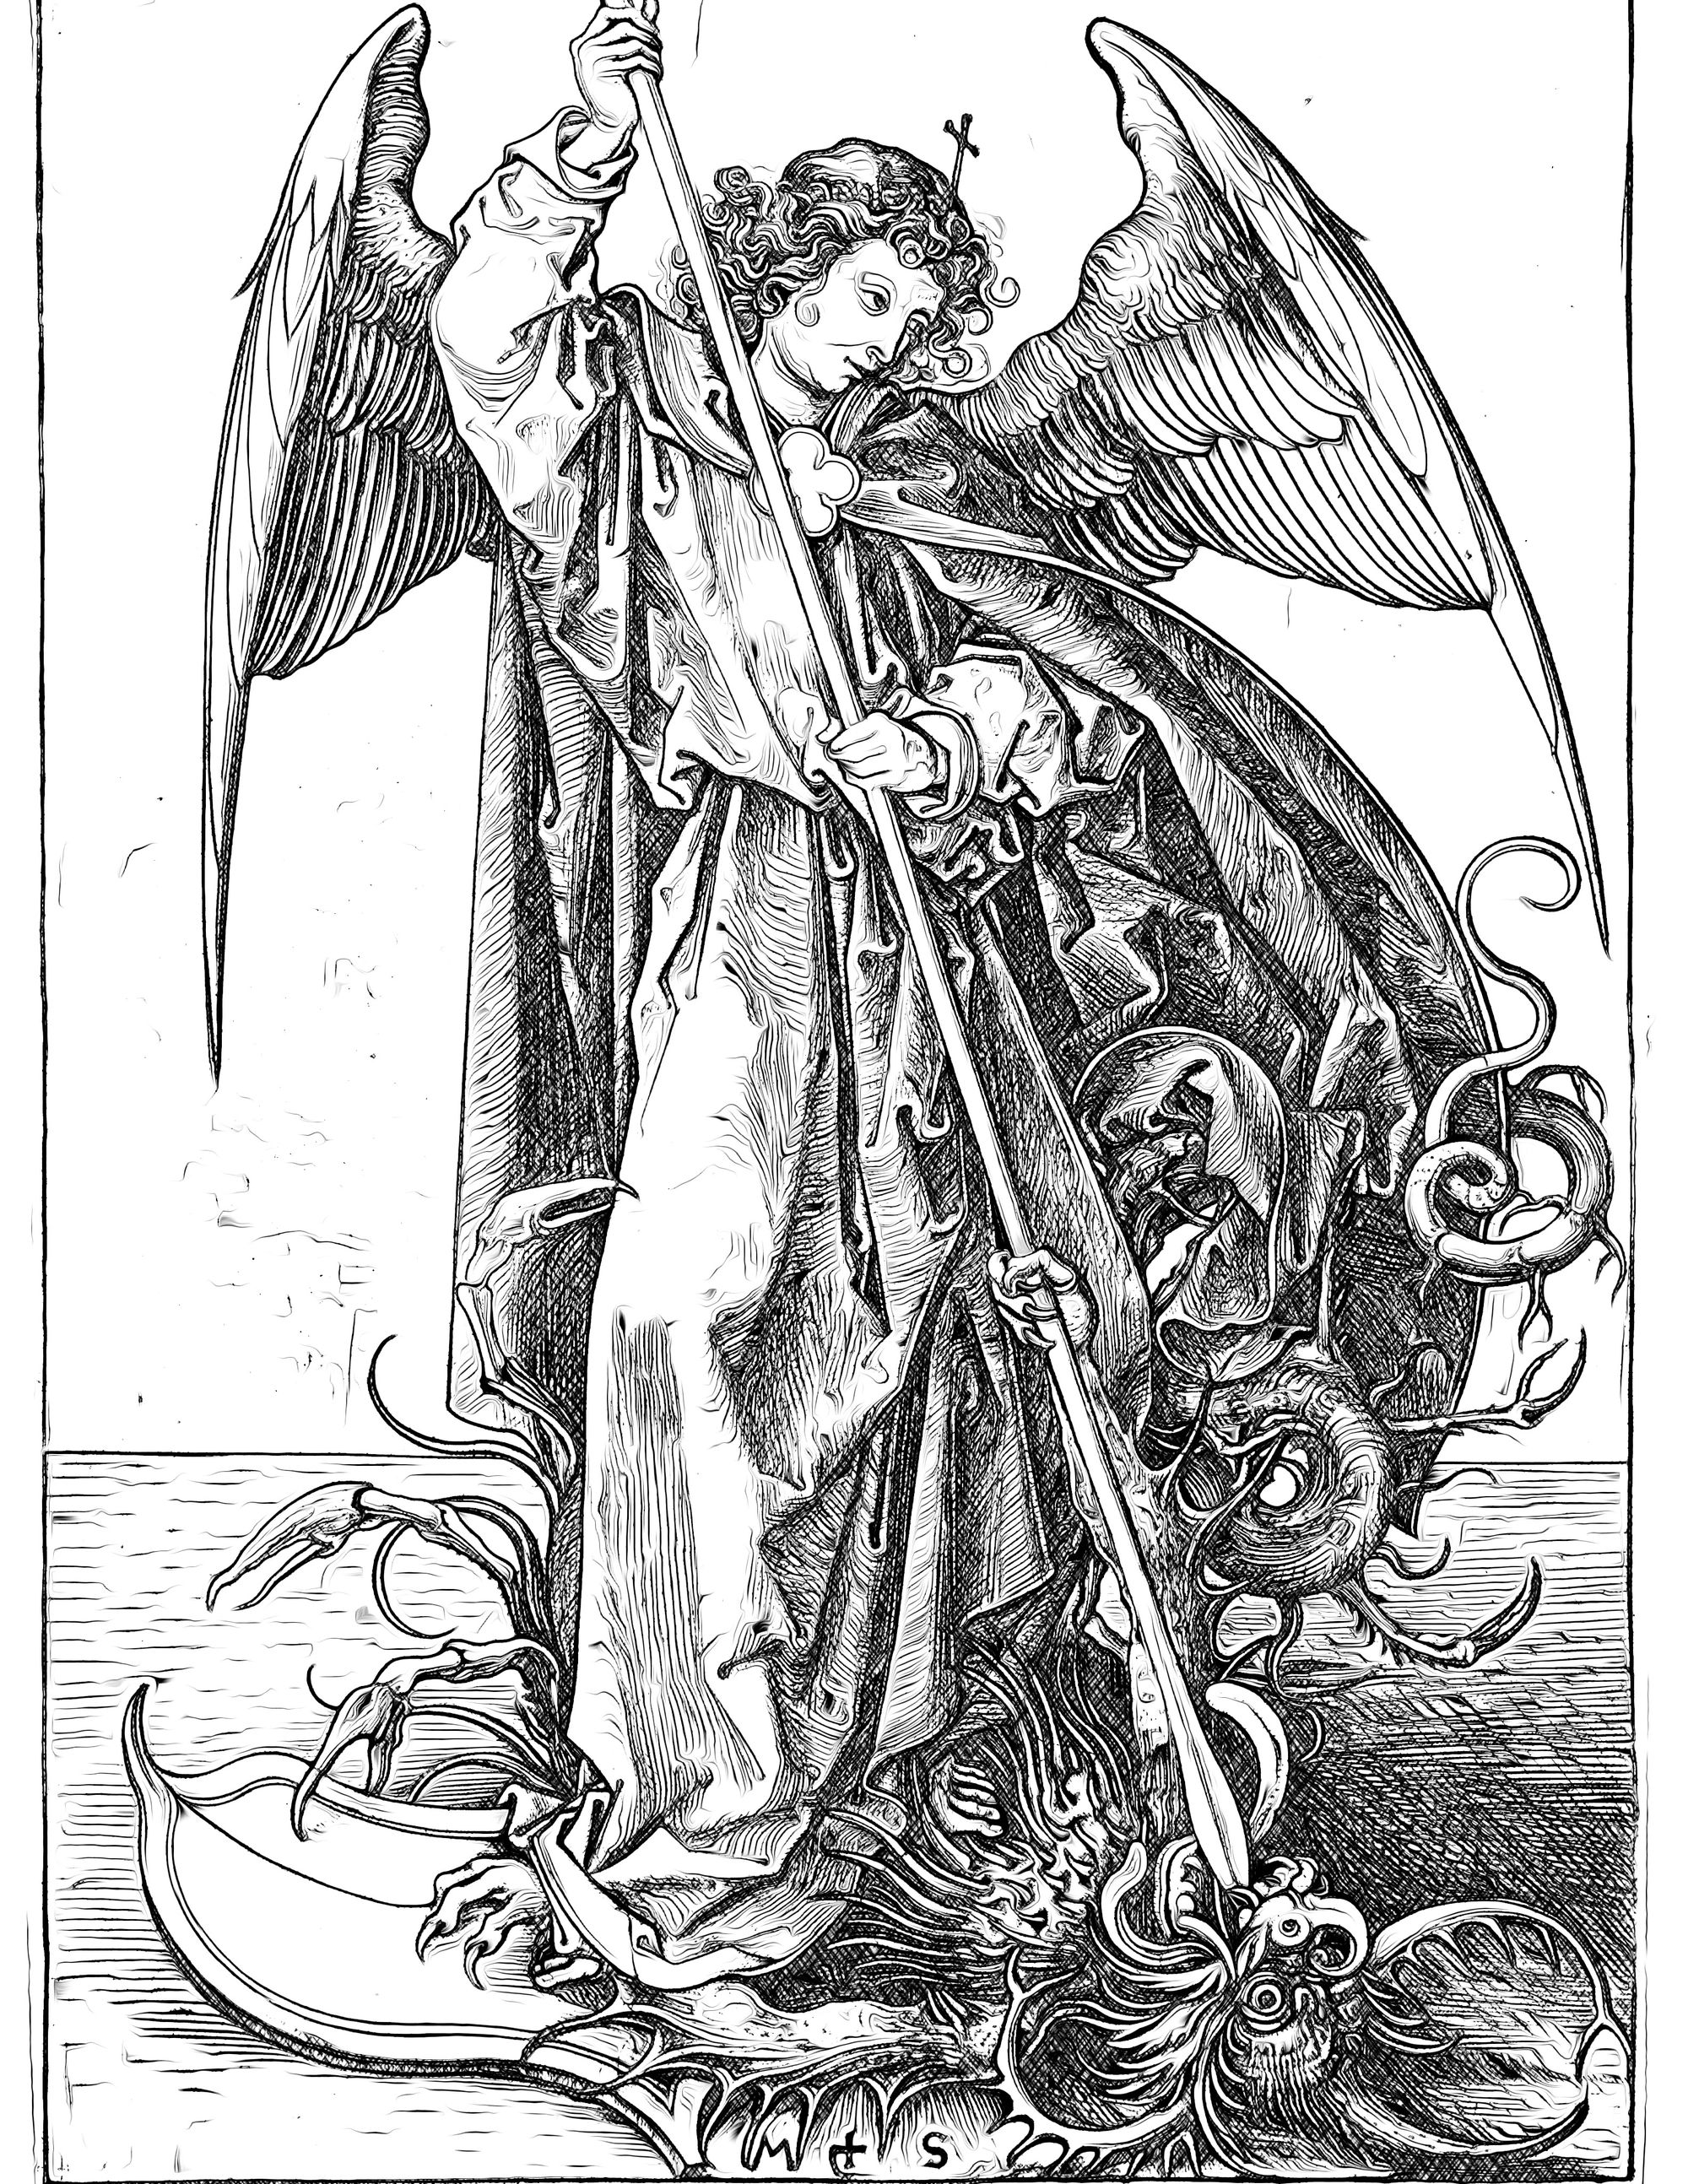 The archangel michael piercing the dragon